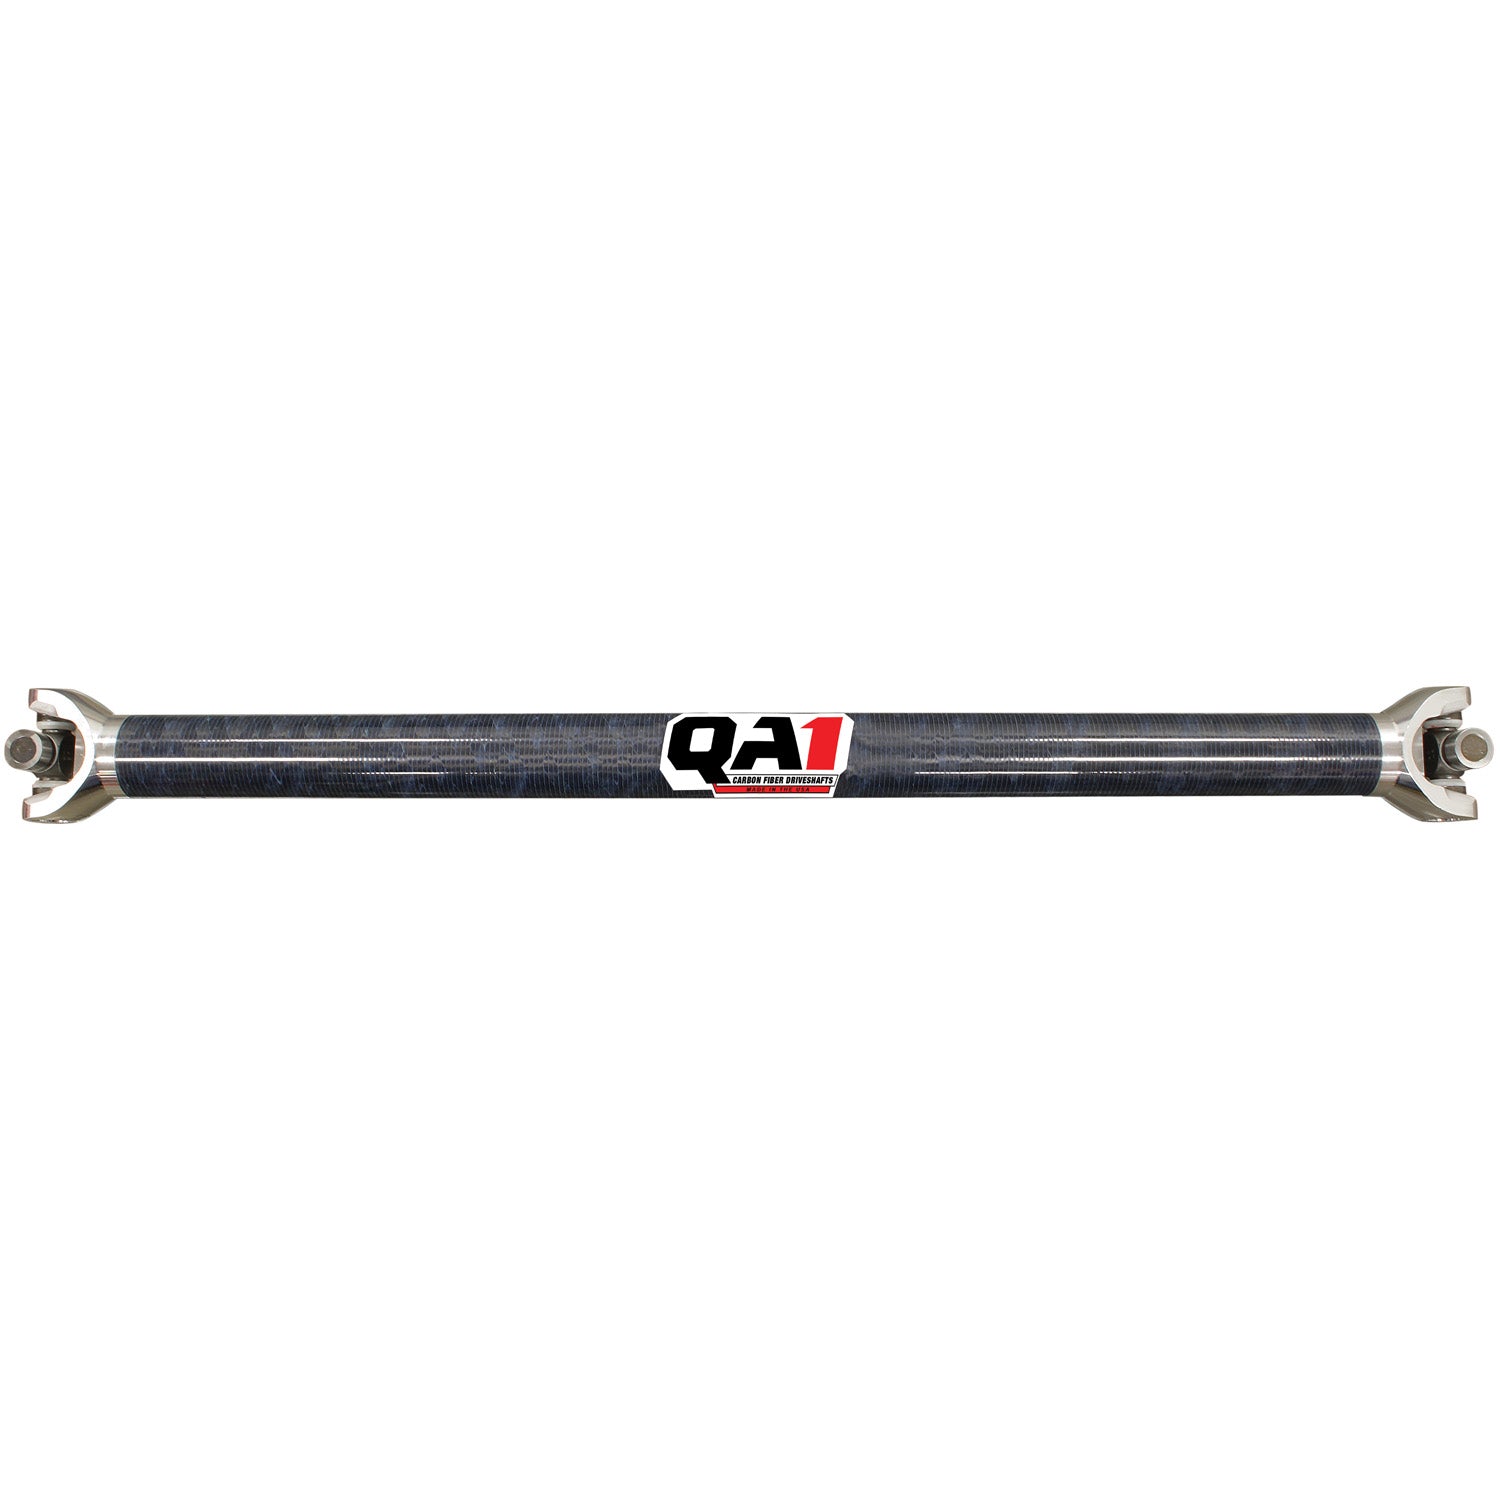 QA1 JJ-11247 Driveshaft, CF, CT-Dirt Cr-Lm, 35.00 inch 2.3 inch, 1310 U-Joint, 1500Lb.